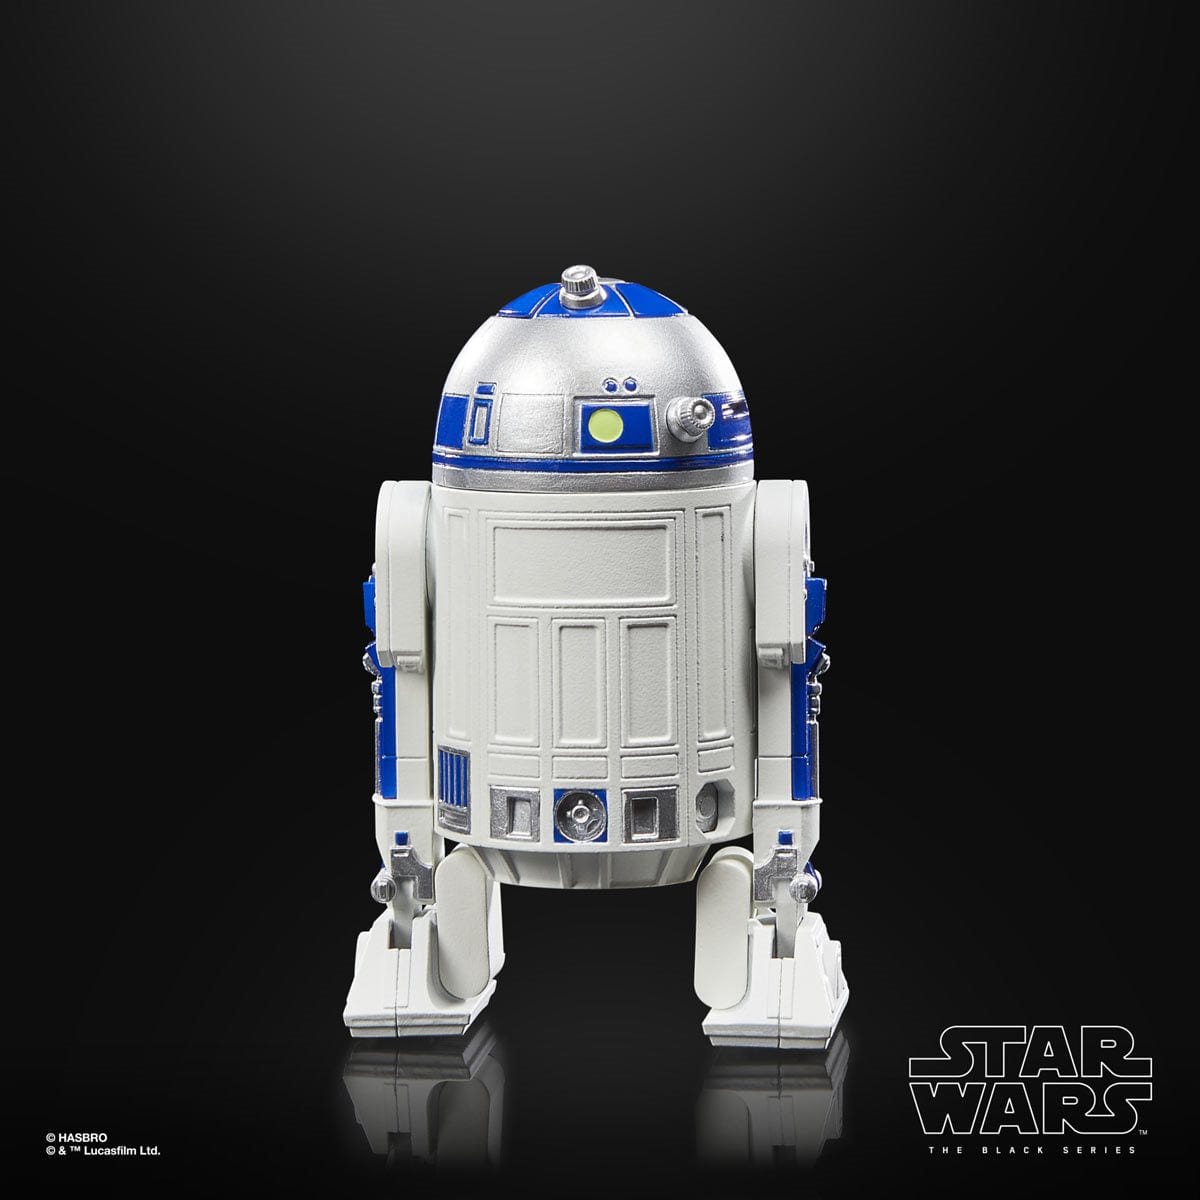 Star Wars The Black Series Return of the Jedi 40th Anniversary 6-Inch R2-D2 (Artoo-Deetoo) Action Figure